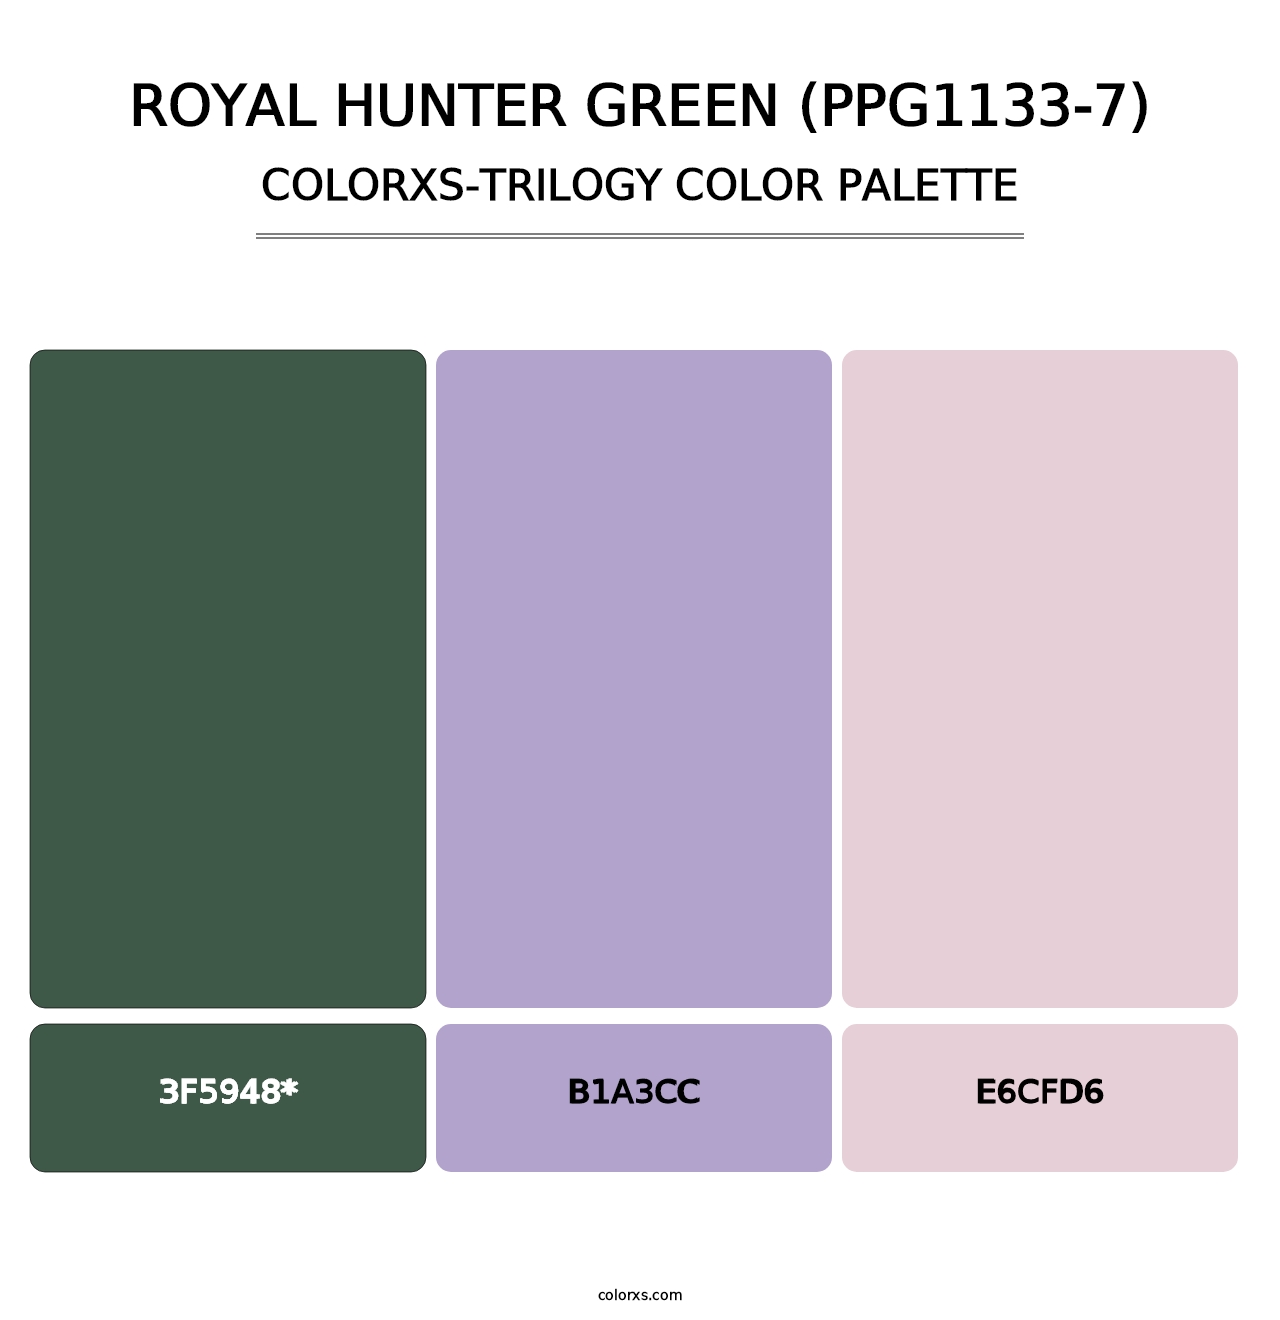 Royal Hunter Green (PPG1133-7) - Colorxs Trilogy Palette